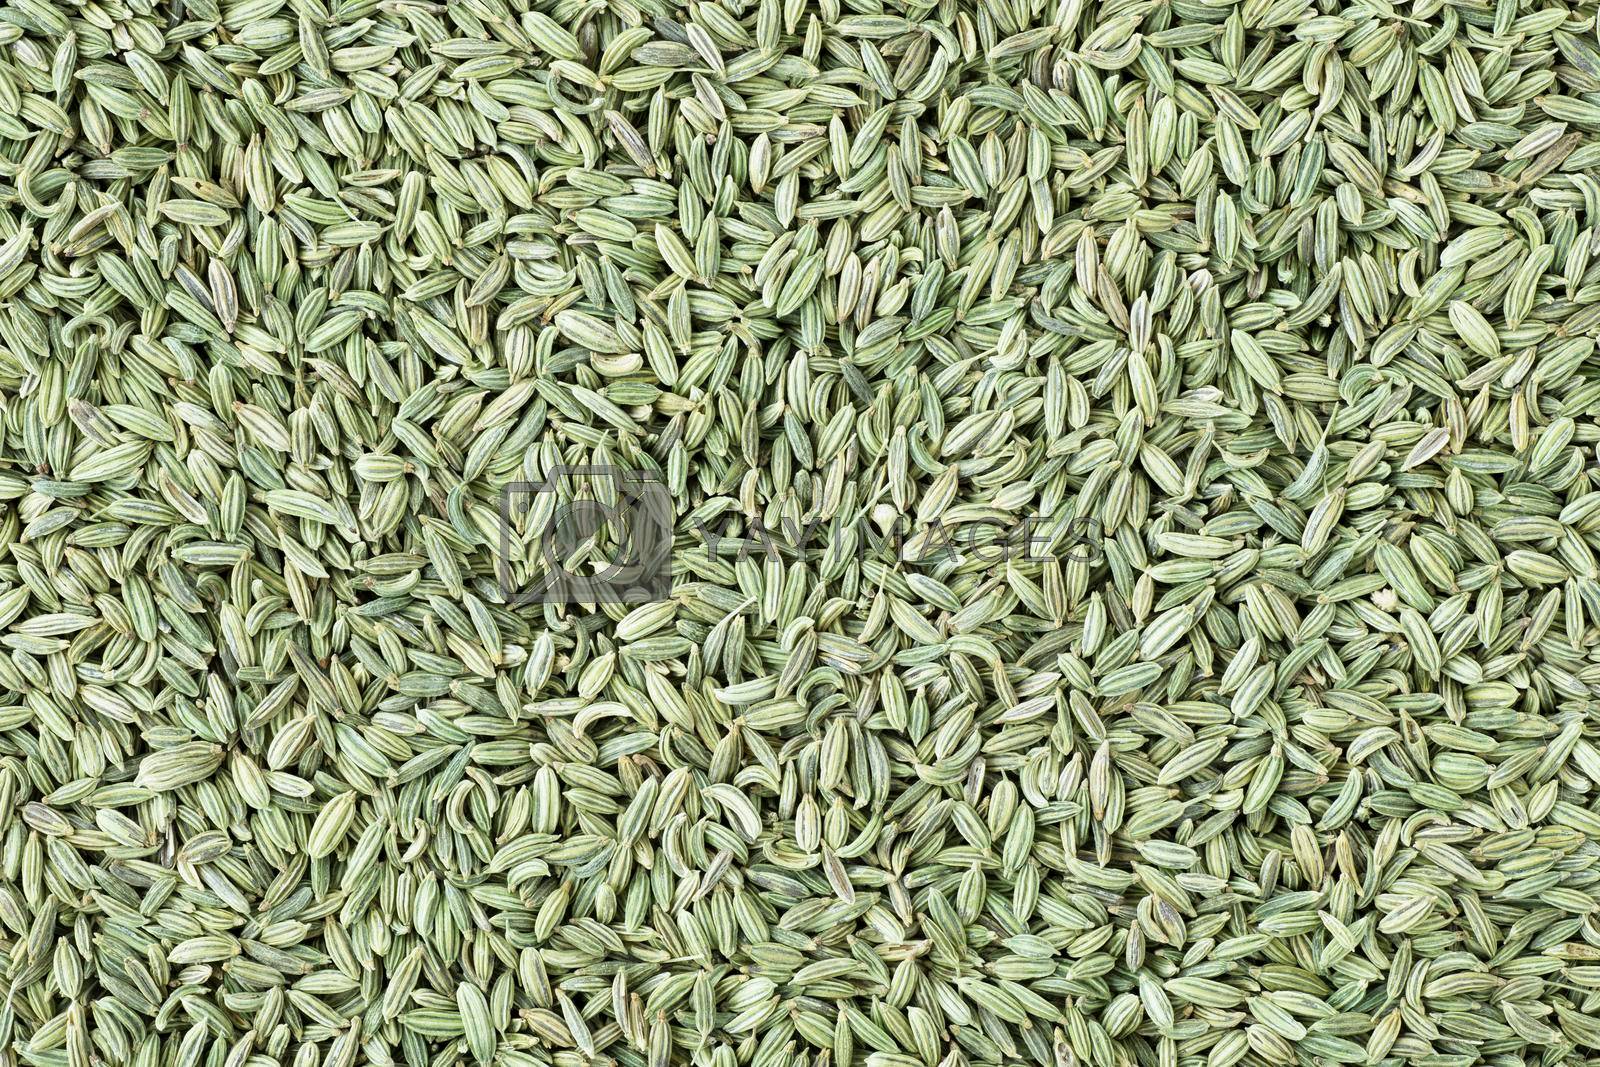 Fennel seeds filling full frame for food background or texture.